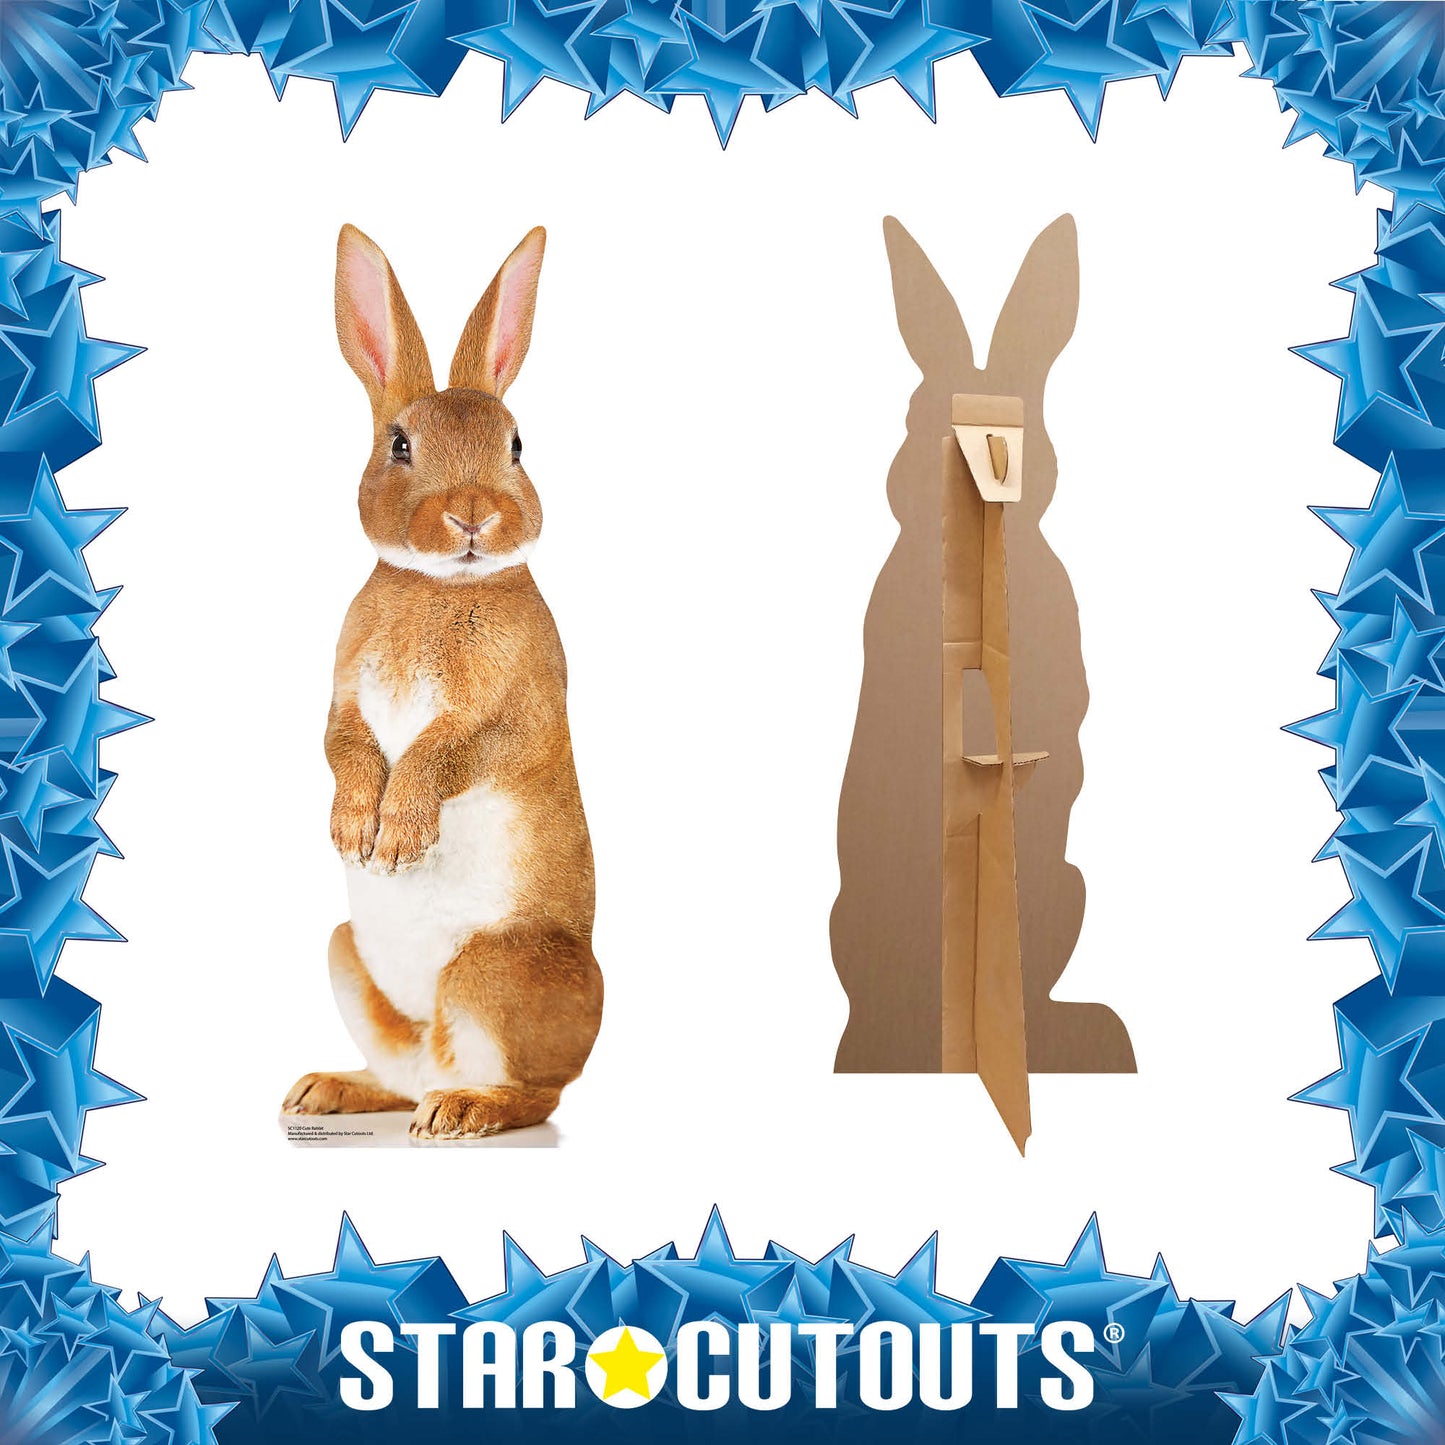 Cute Rabbit British Wildlife, Farm and Countryside Theme Animal Cardboard Cutout